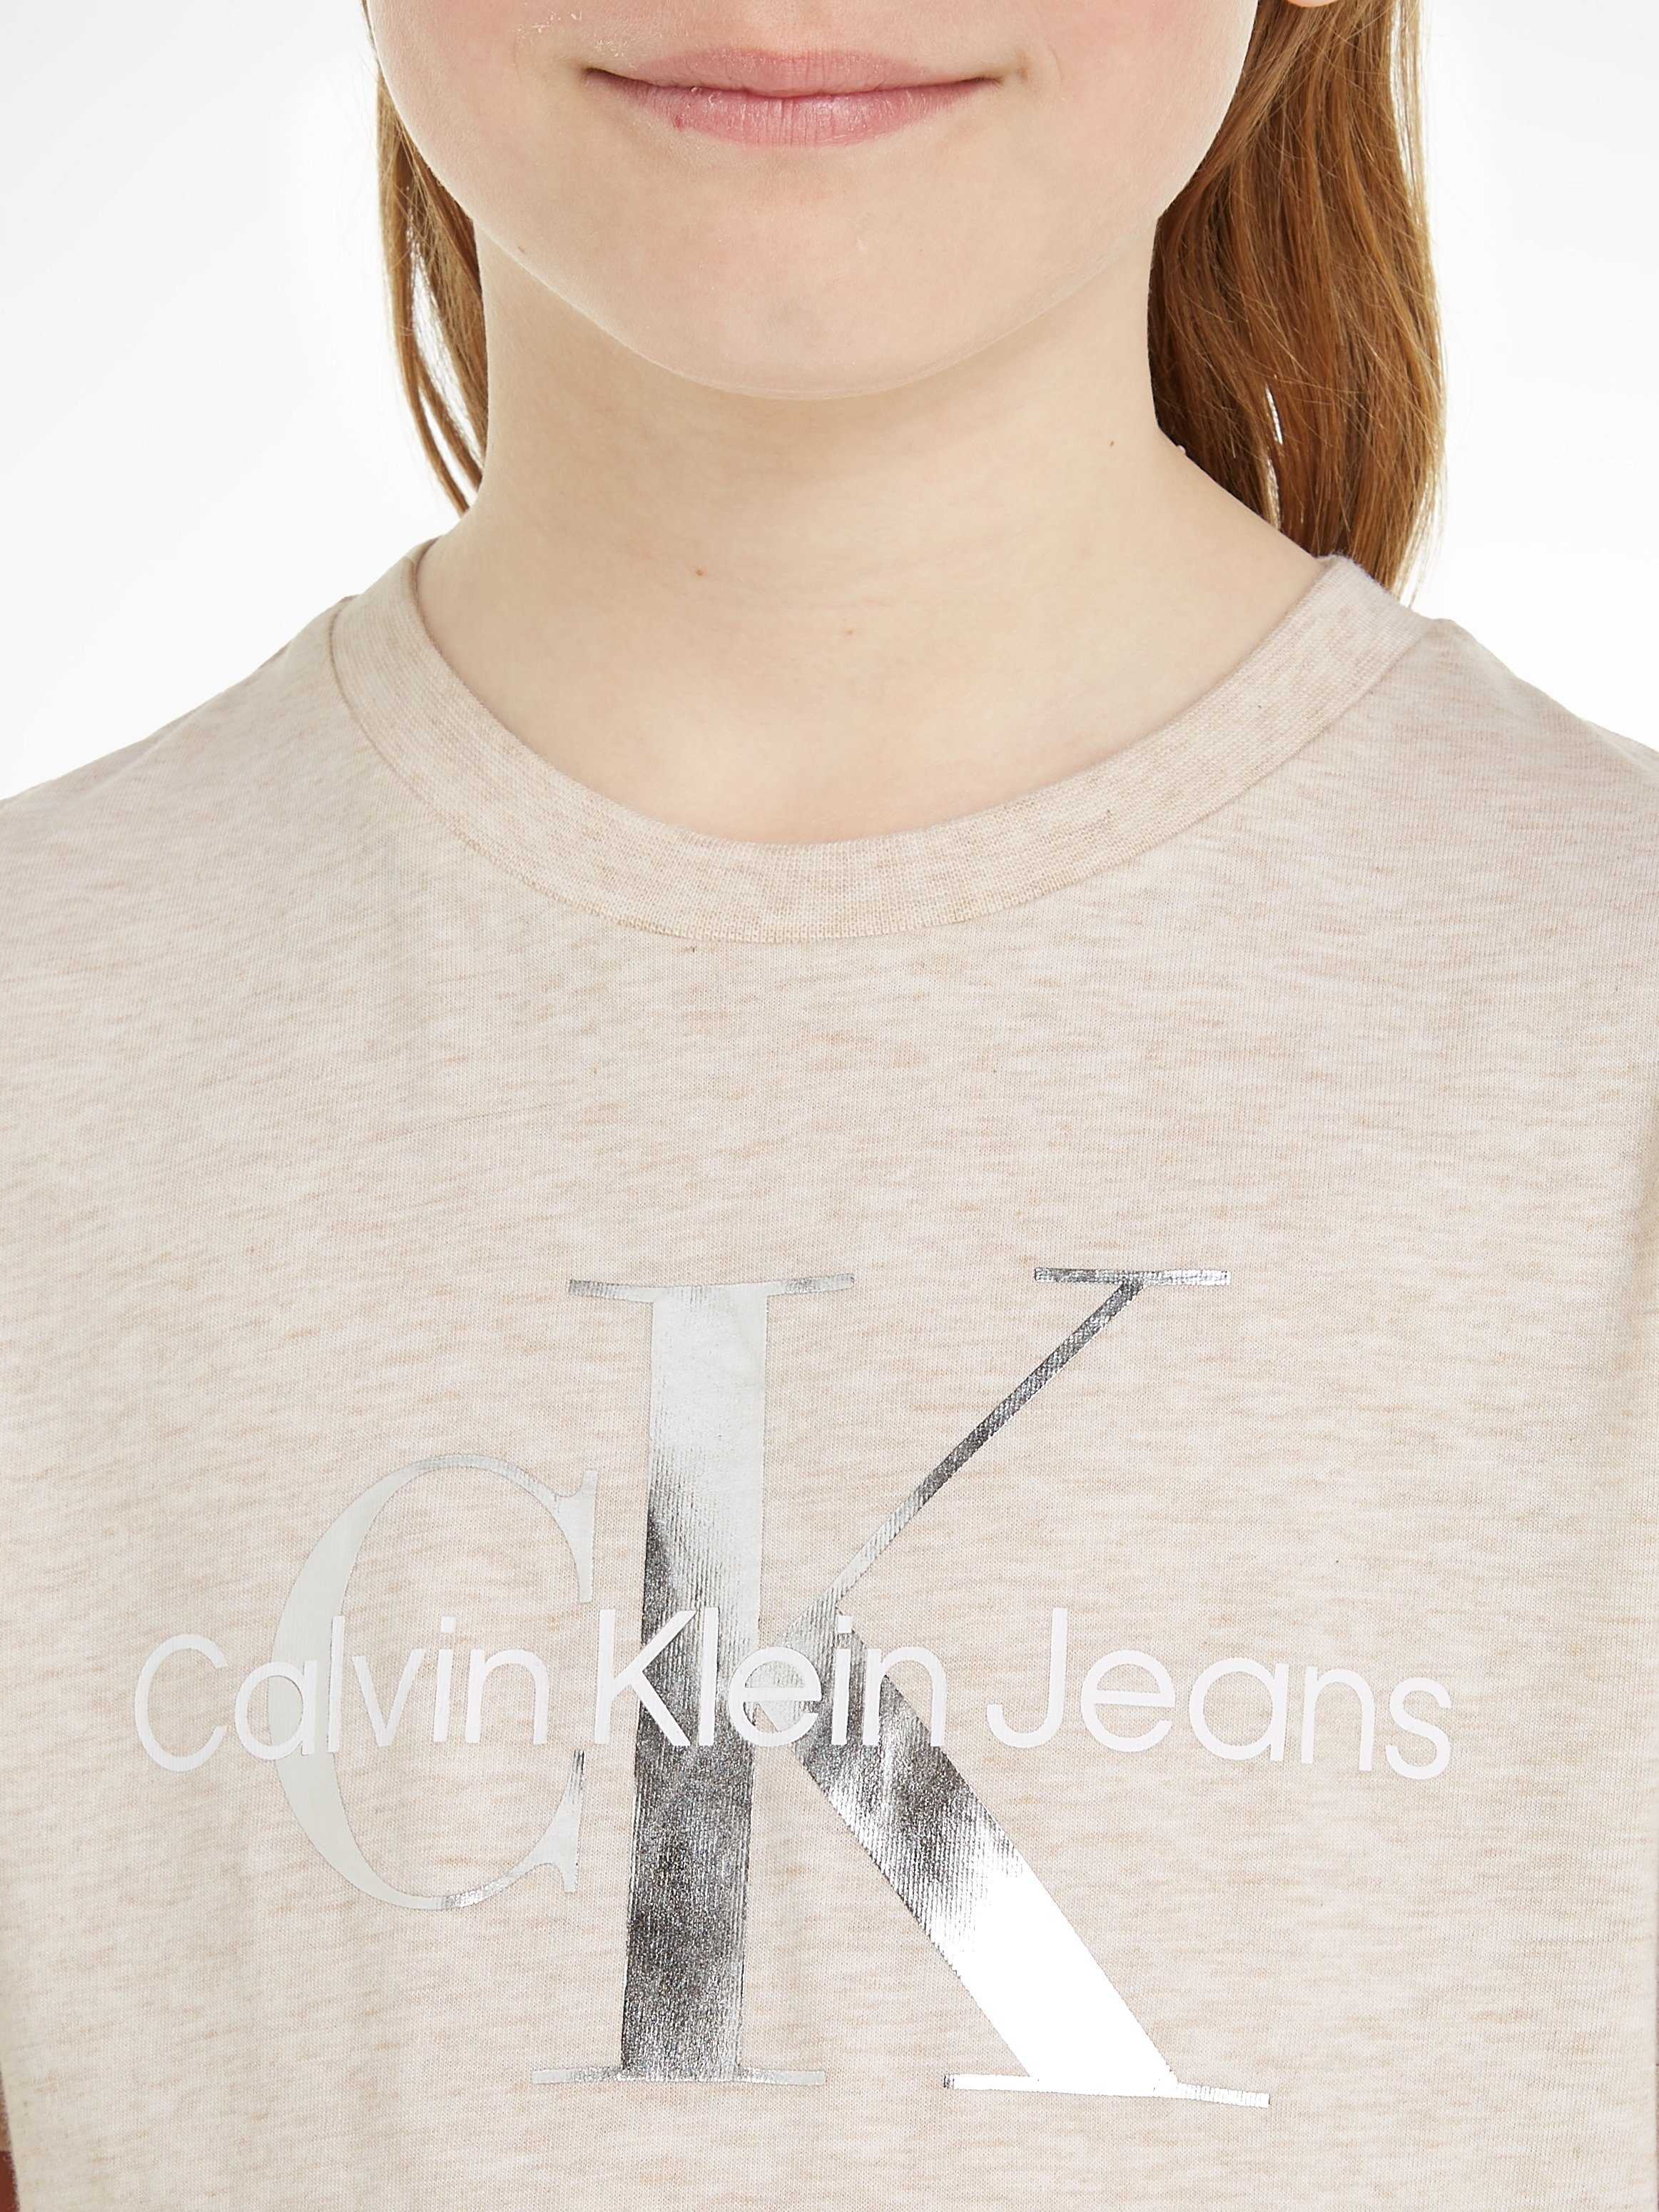 T-Shirt Calvin T-SHIRT SS Vanilla Klein Heather CK Jeans MONOGRAM